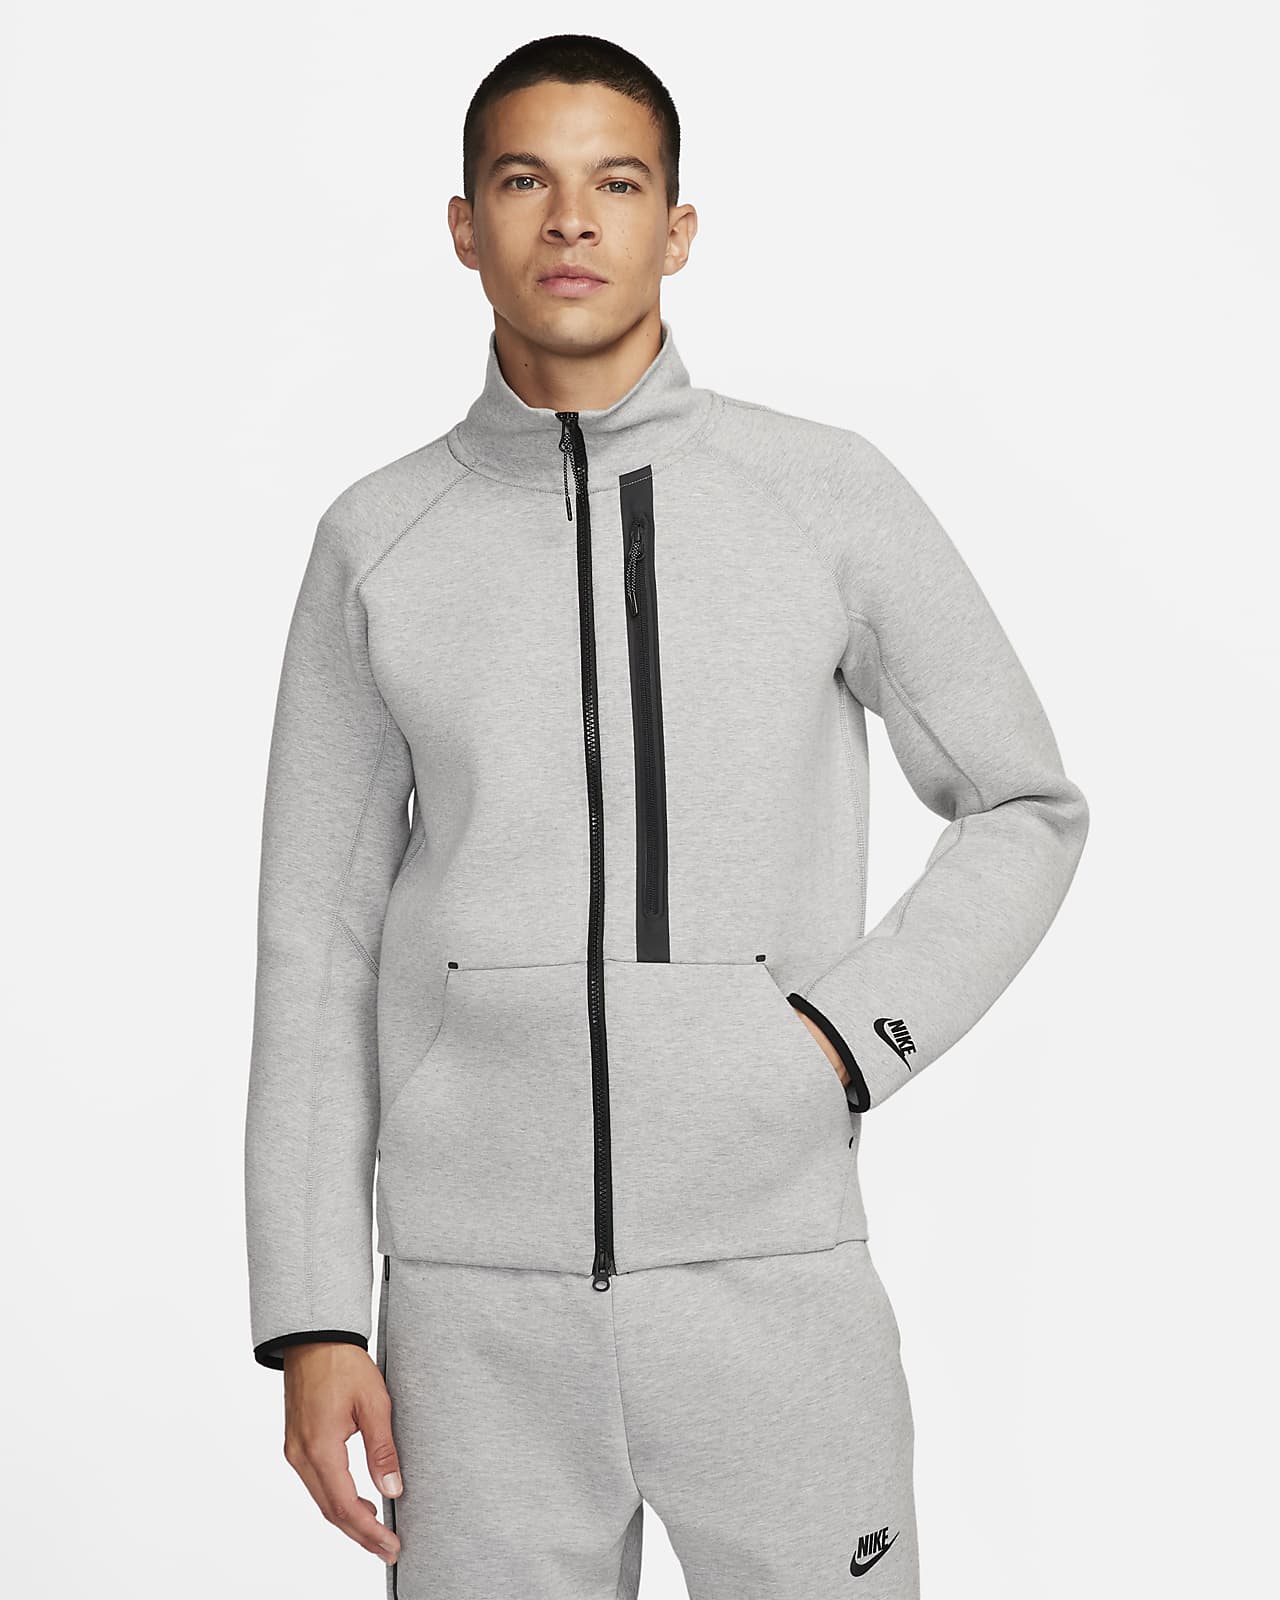 median ingen forbindelse mavepine Nike Sportswear Tech Fleece OG Men's Slim Fit Jacket. Nike.com